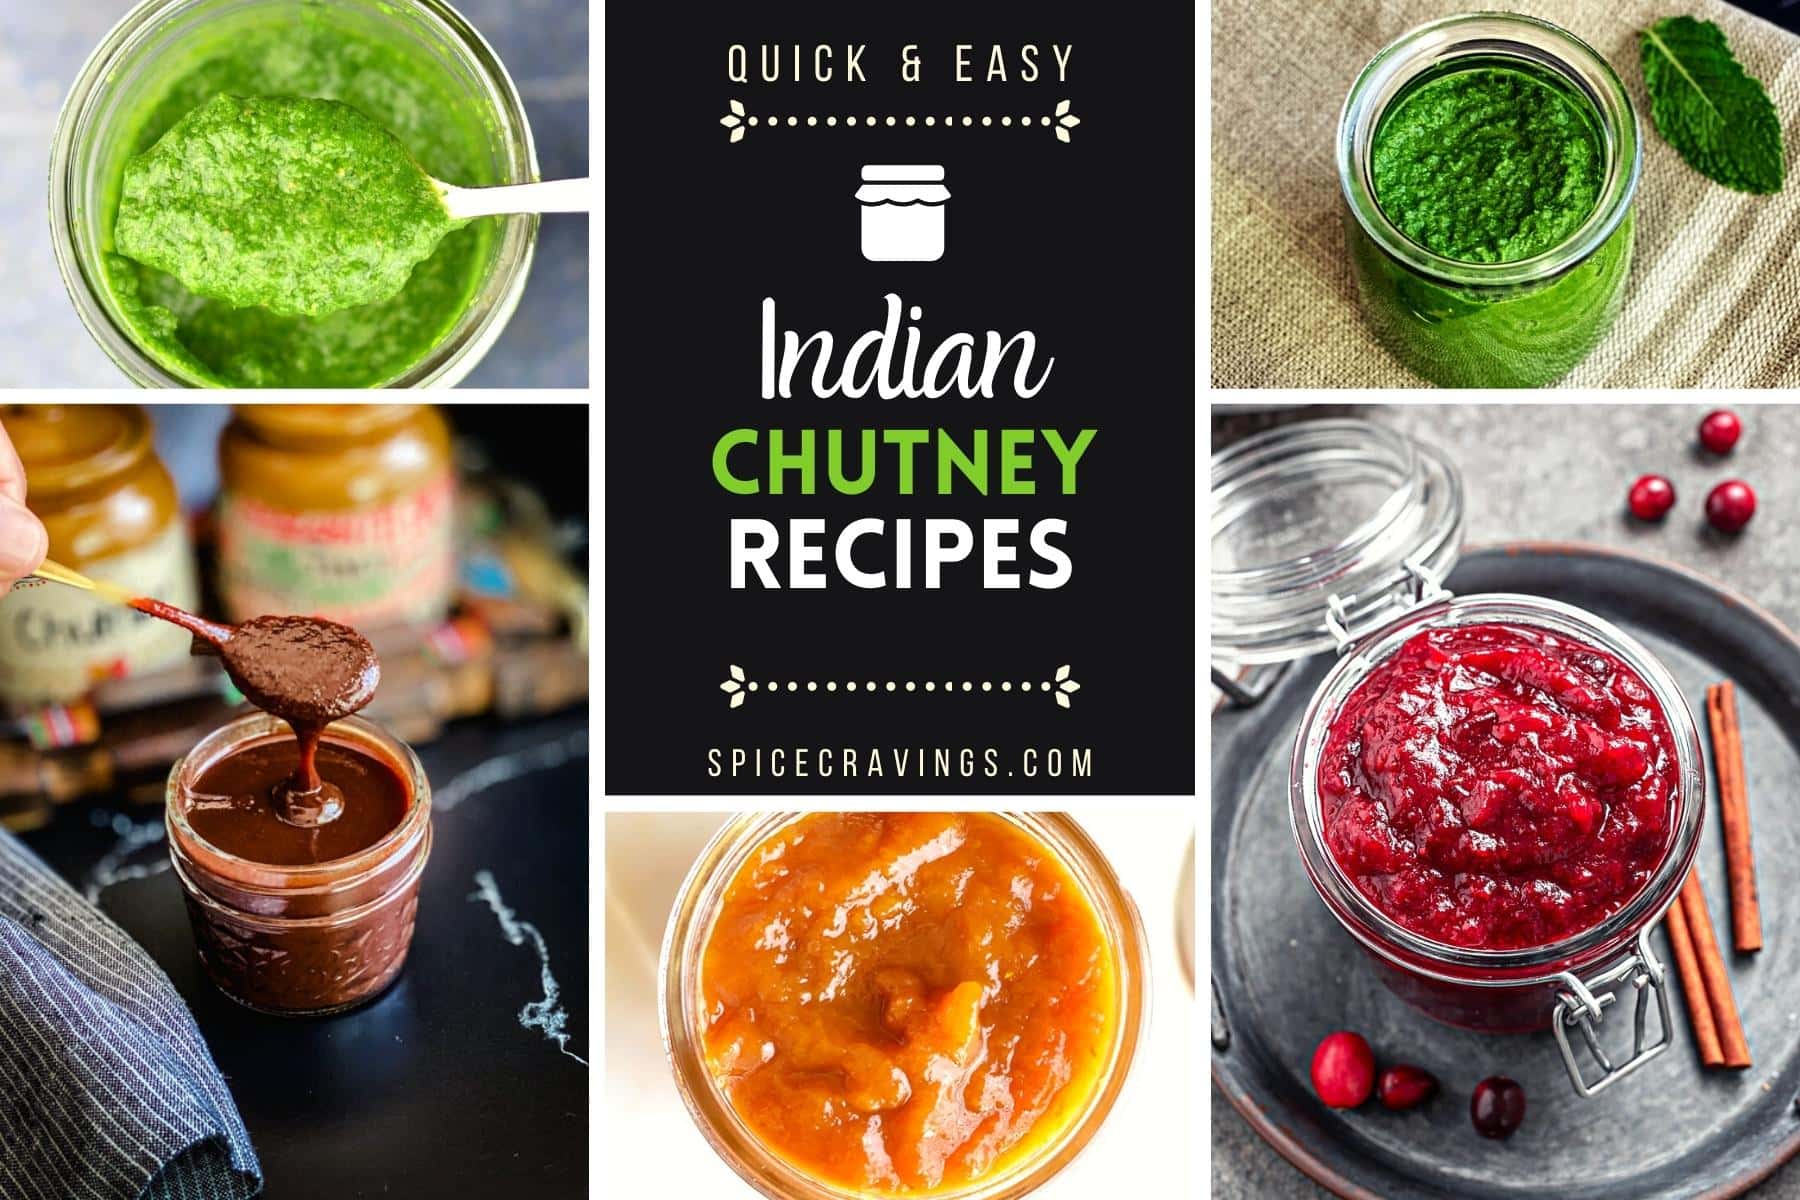 5-image grid of popular Indian chutney recipes